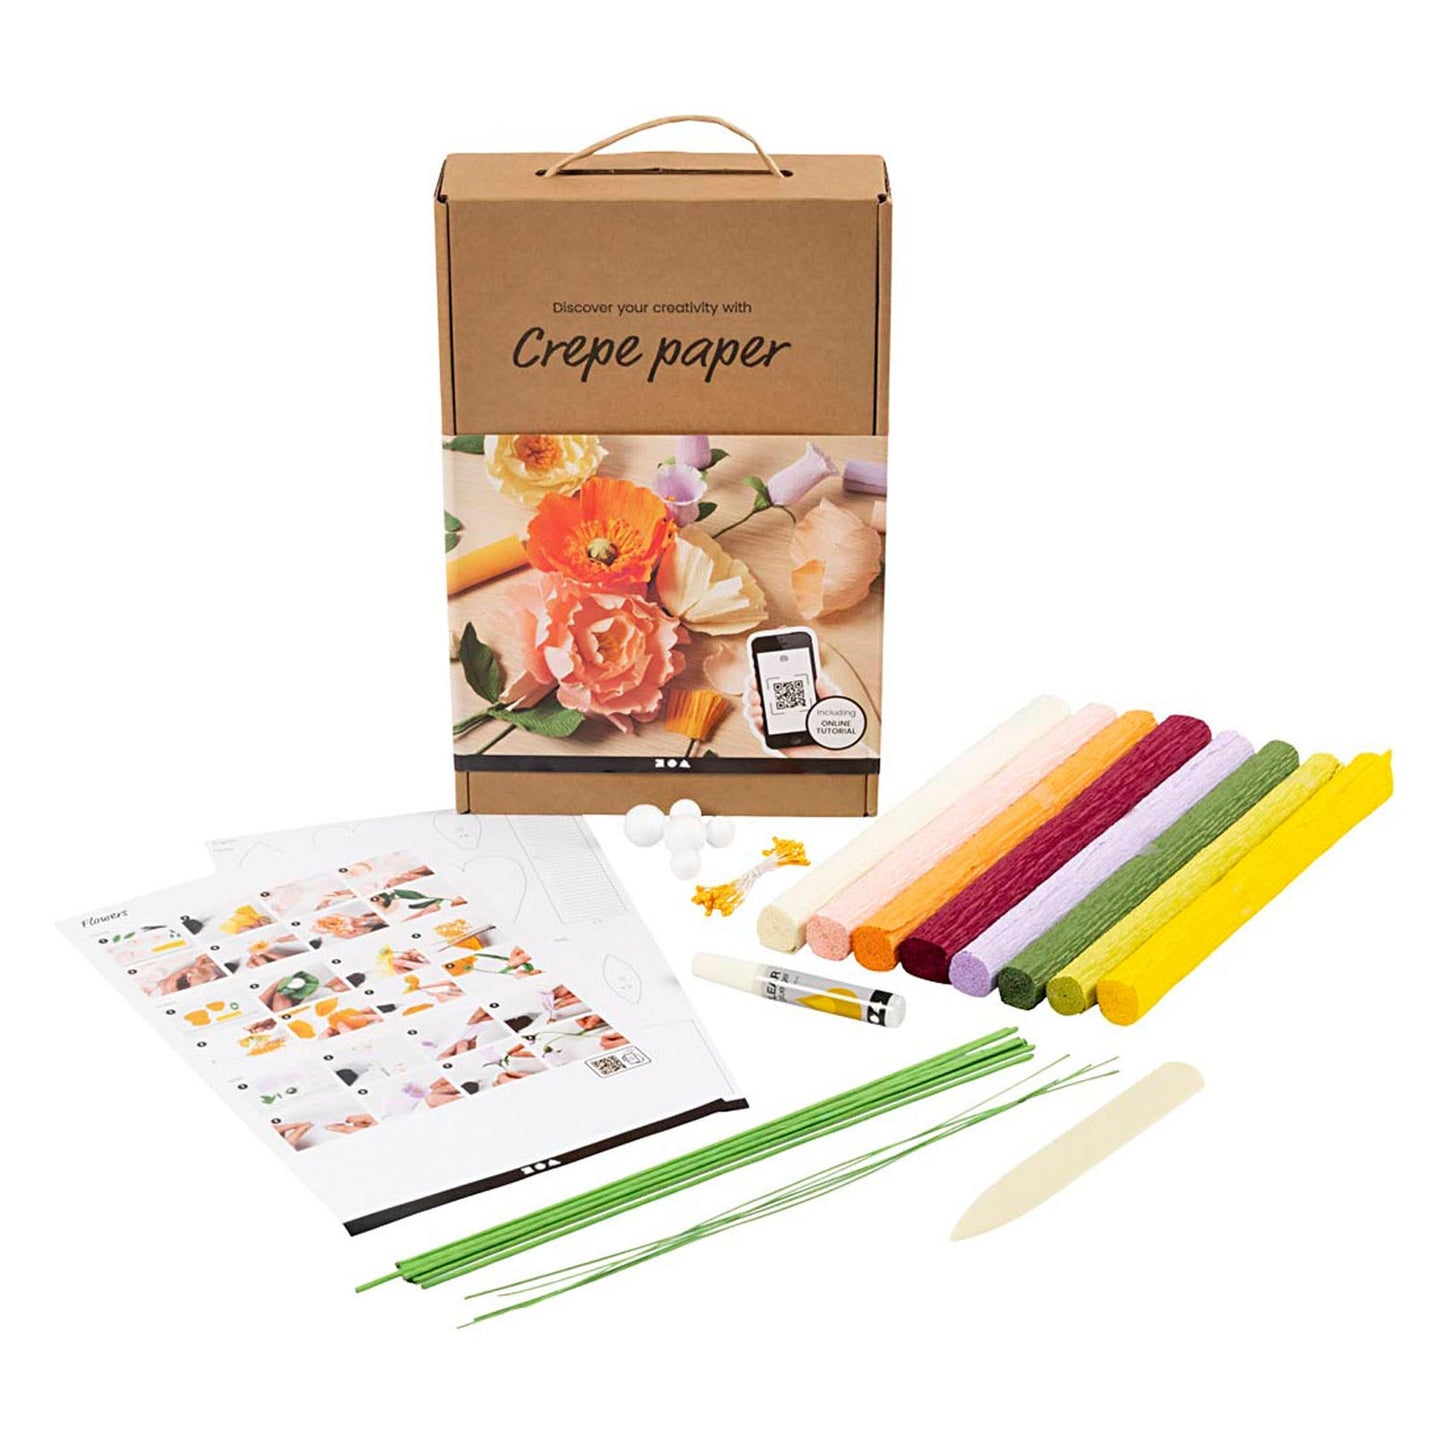 Kit per la creazione di fiori di carta crespa